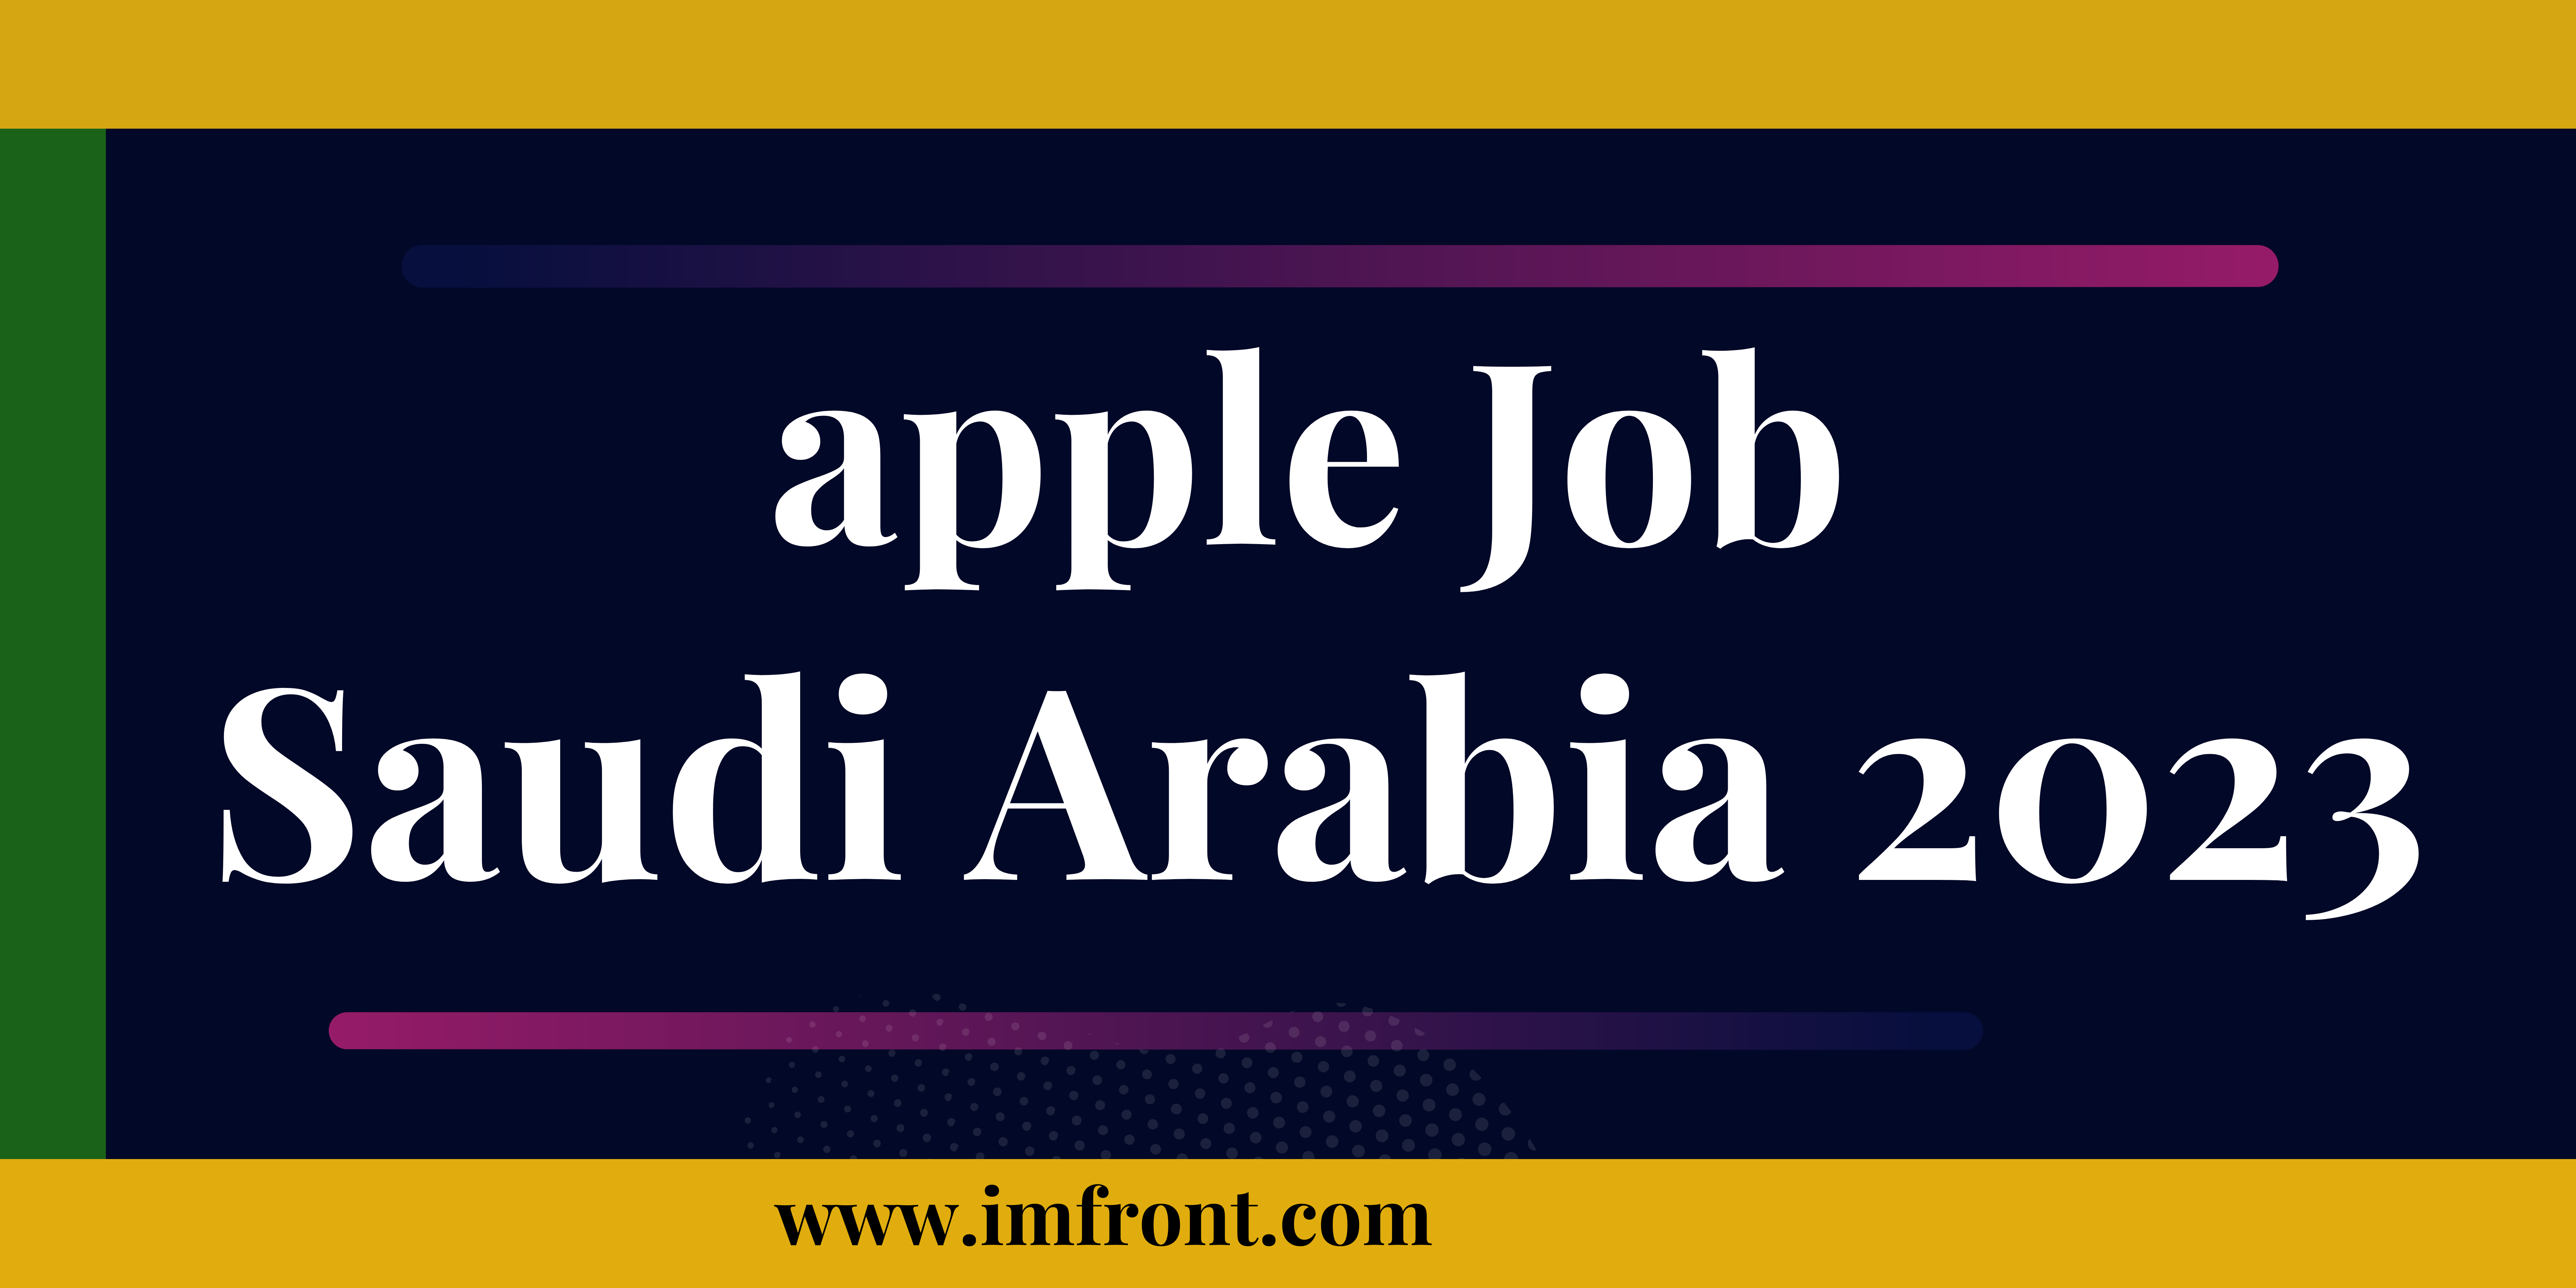 apple career Job In Saudi Arabia | best salary UAE 2023